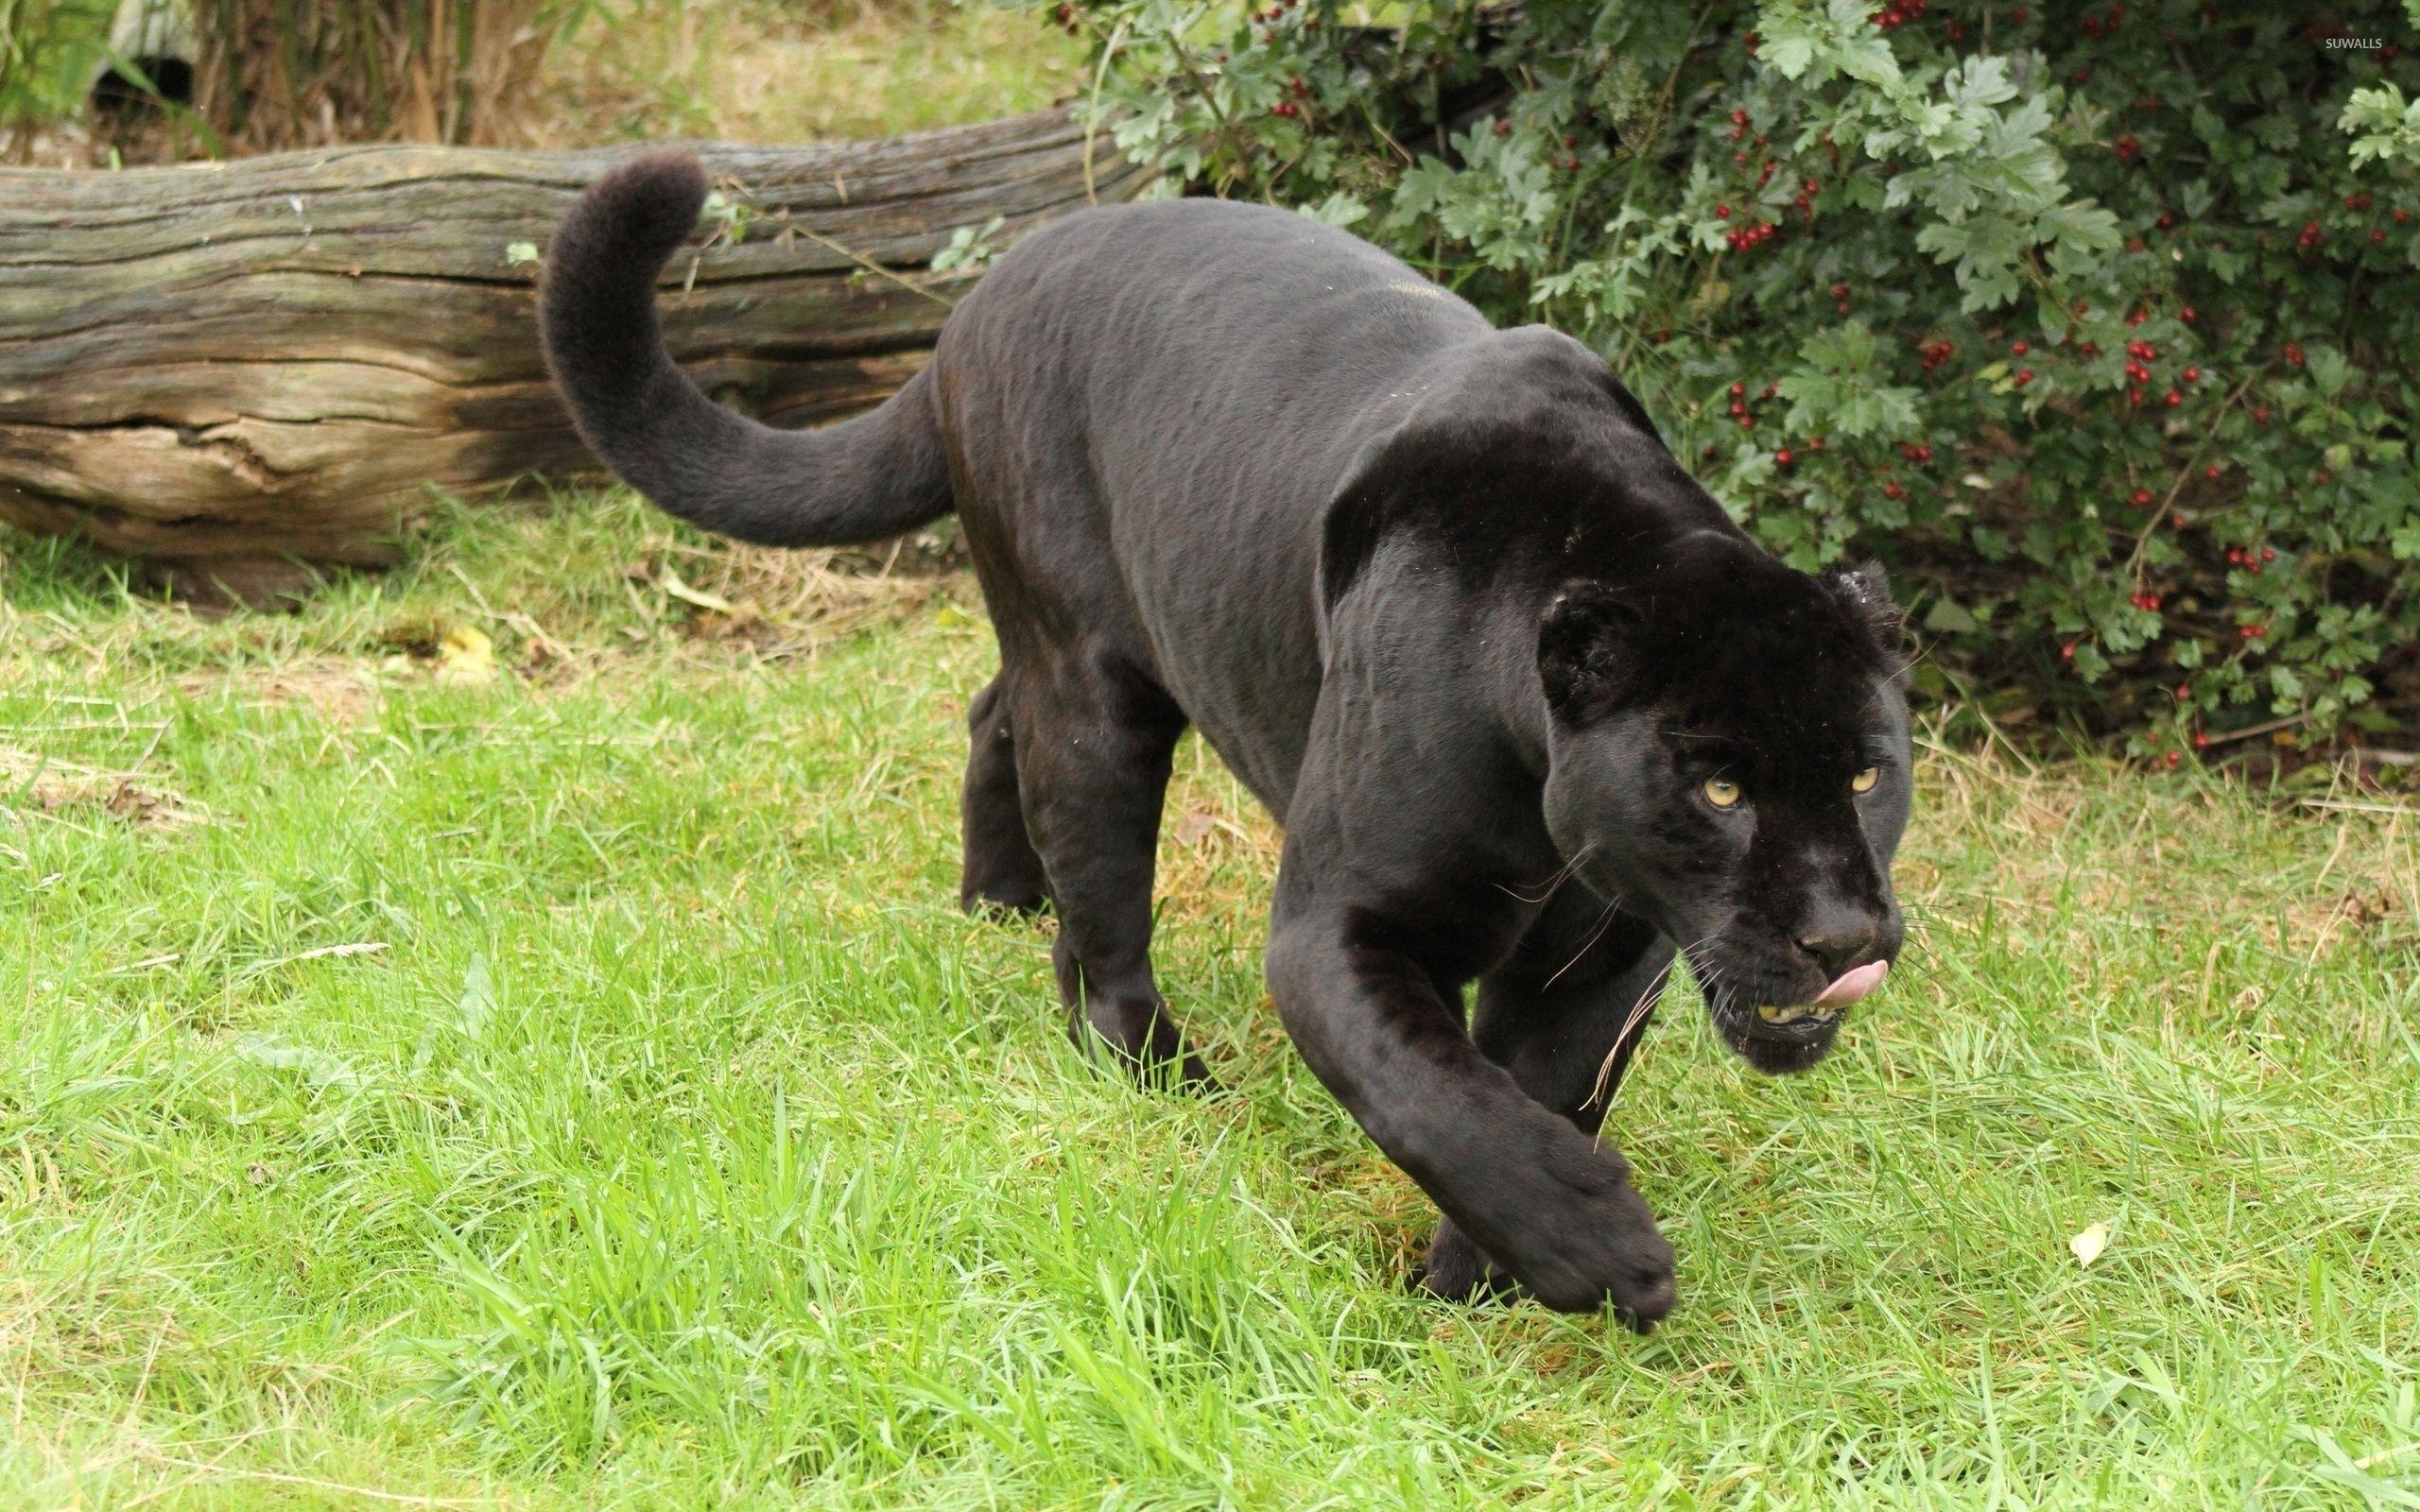 runny-chough137: A image of a black jaguar with Batman logo